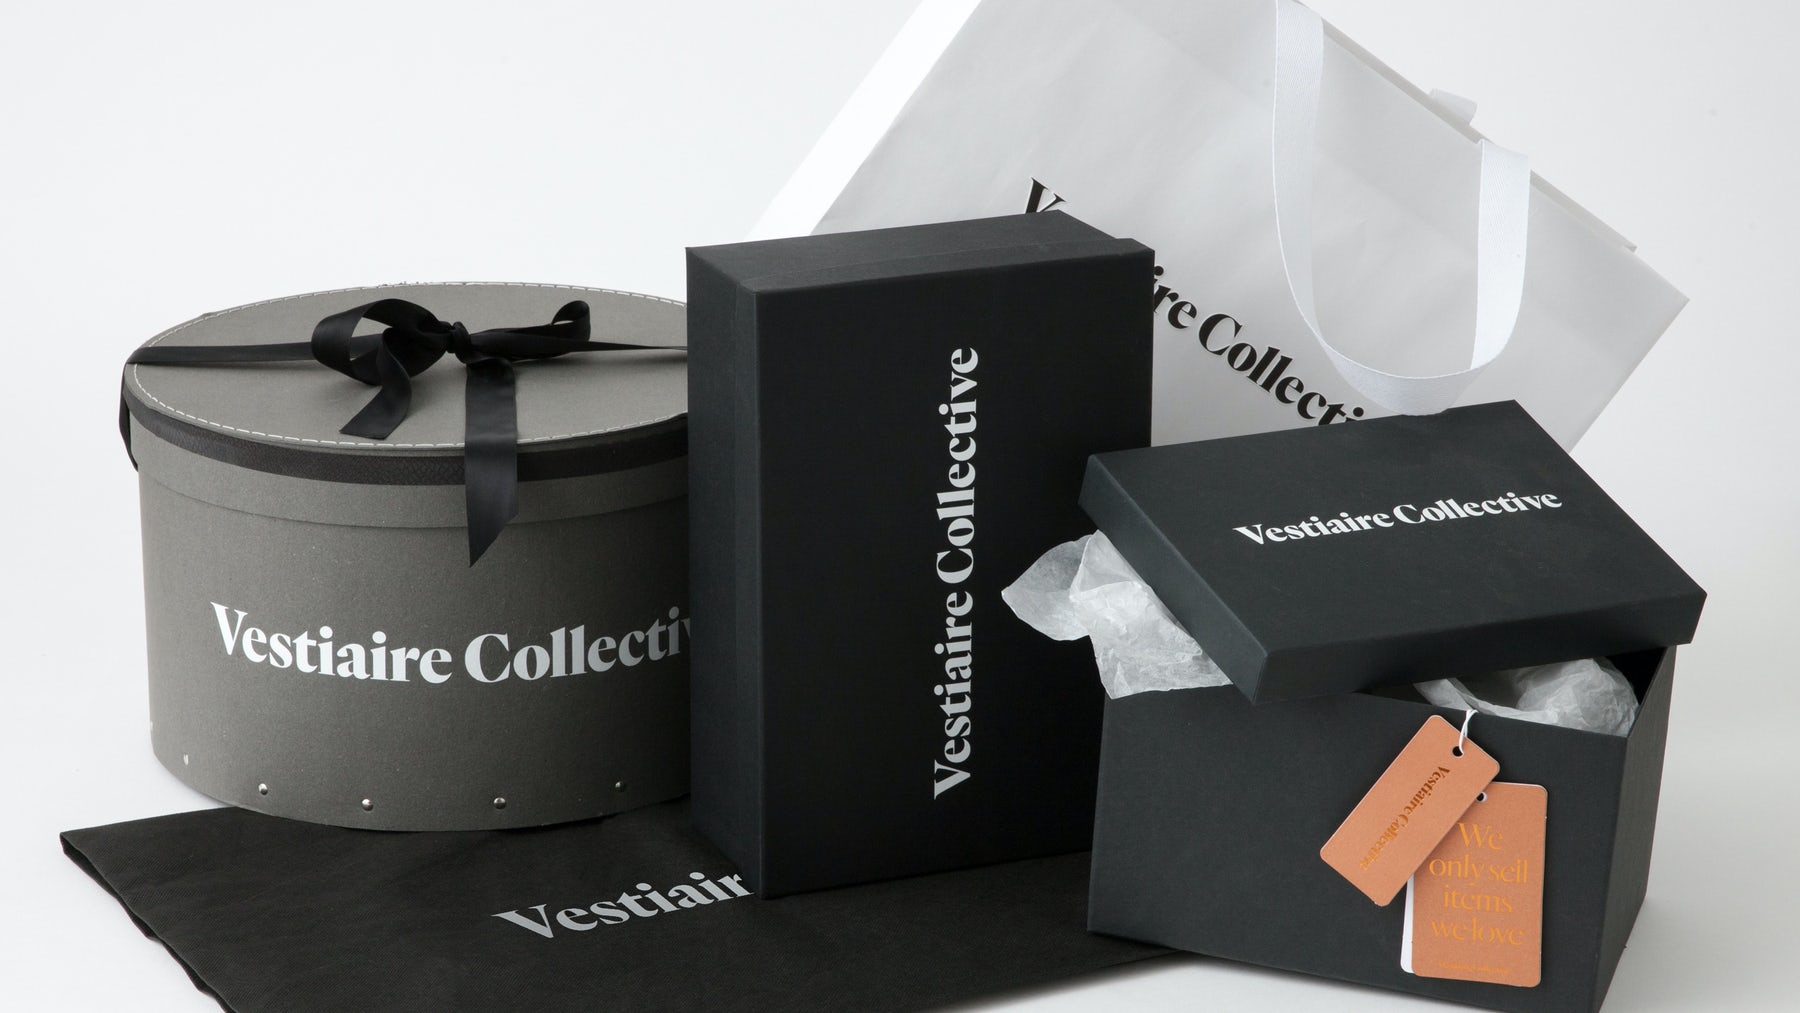 Vestiaire. Luxury resale platform Vestiaire Collective is pioneering a Fashion Revolution. Vestiaire Collective все условия хранения.